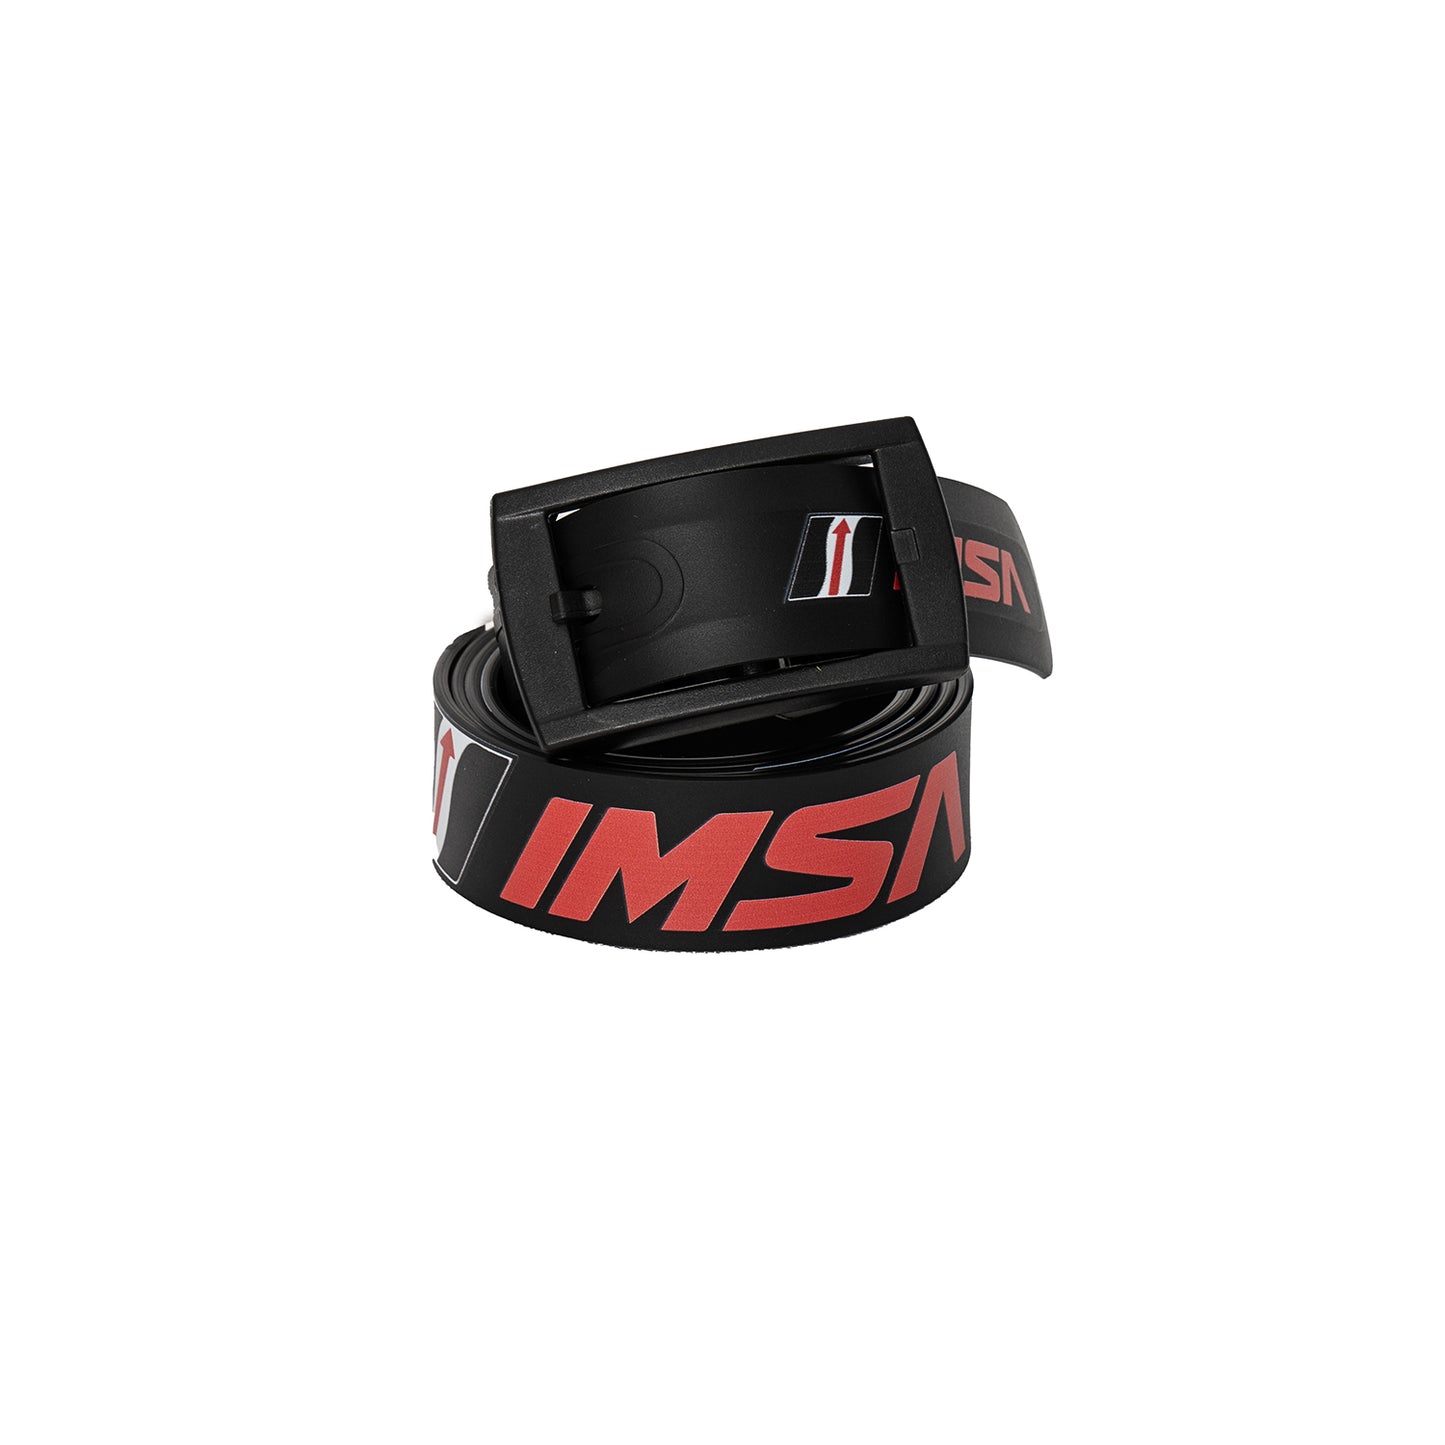 IMSA Logoed Belt